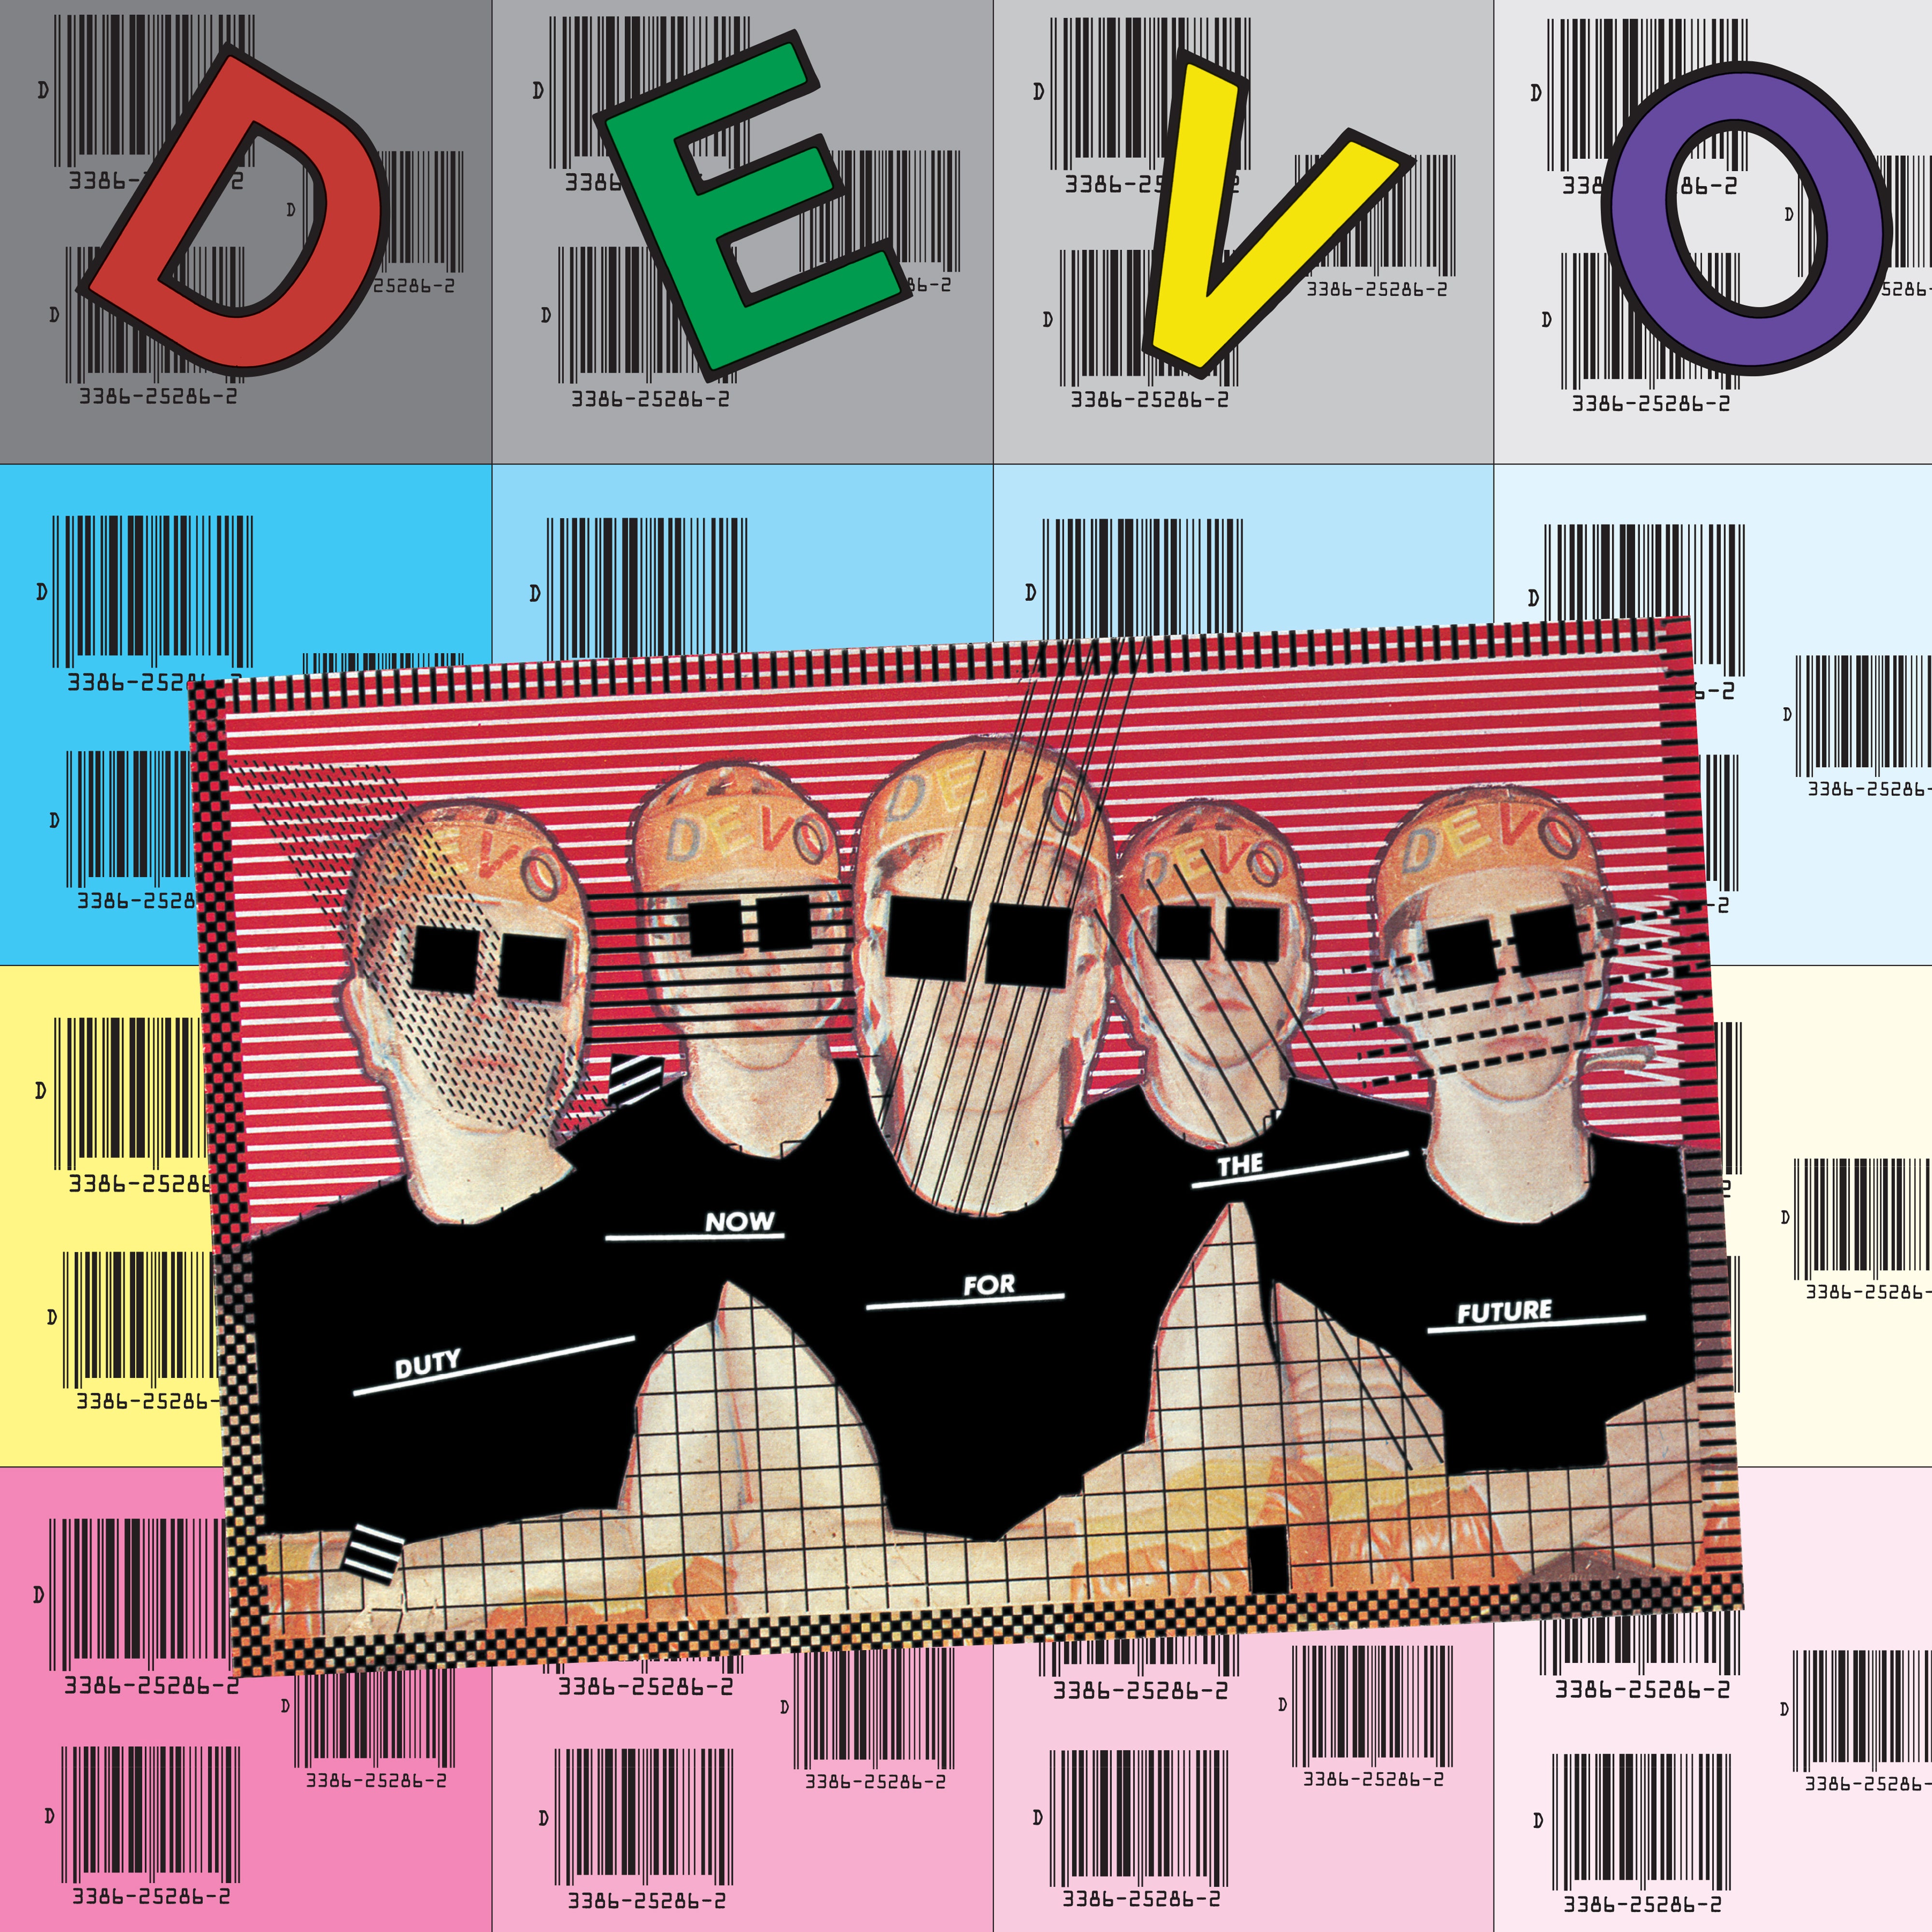 Devo | Duty Now For The Future (1Lp X 140 Color Vinyl ROCKTOBER 2020 BRICK N MORTAR EXCLUSIVE) | Vinyl